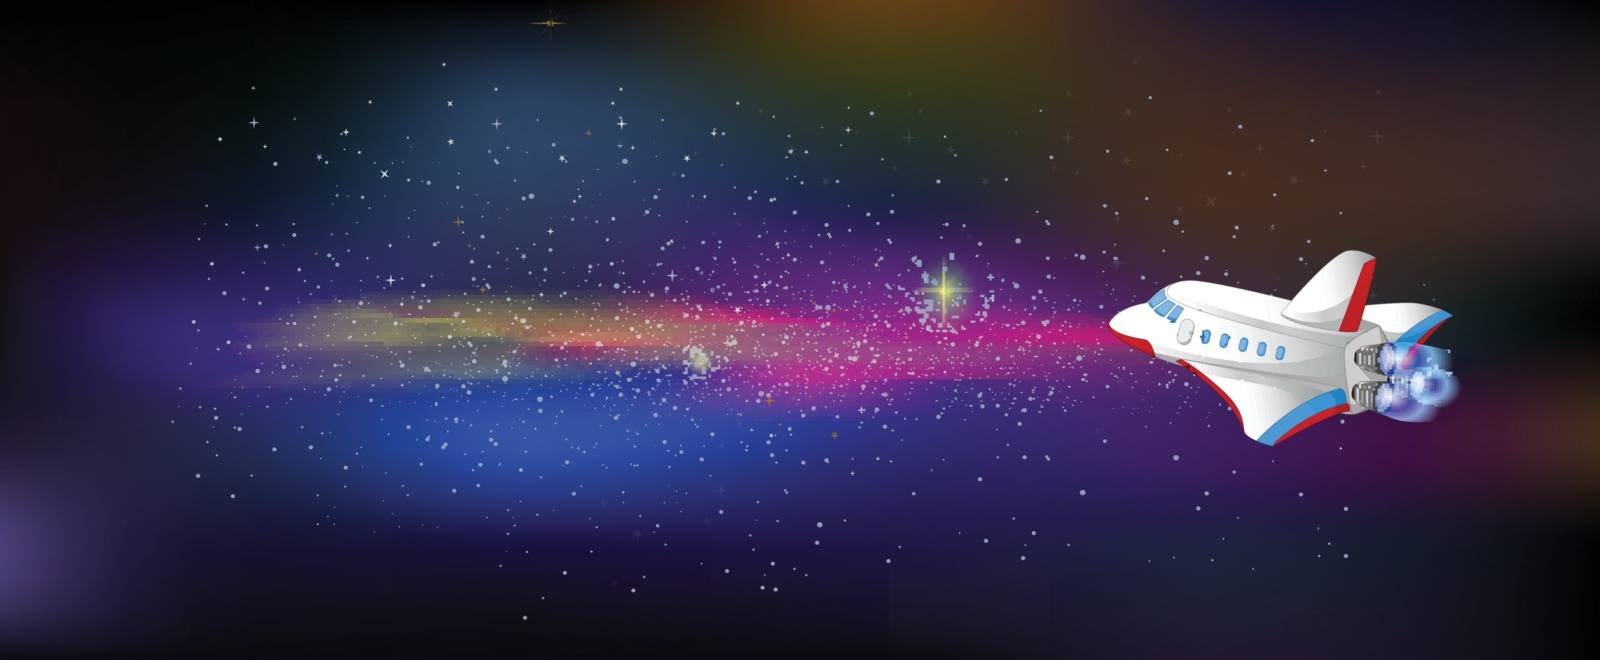 Rocket Airplane Shuttle in Milky Way Galaxy Space View Cartoon by sujono